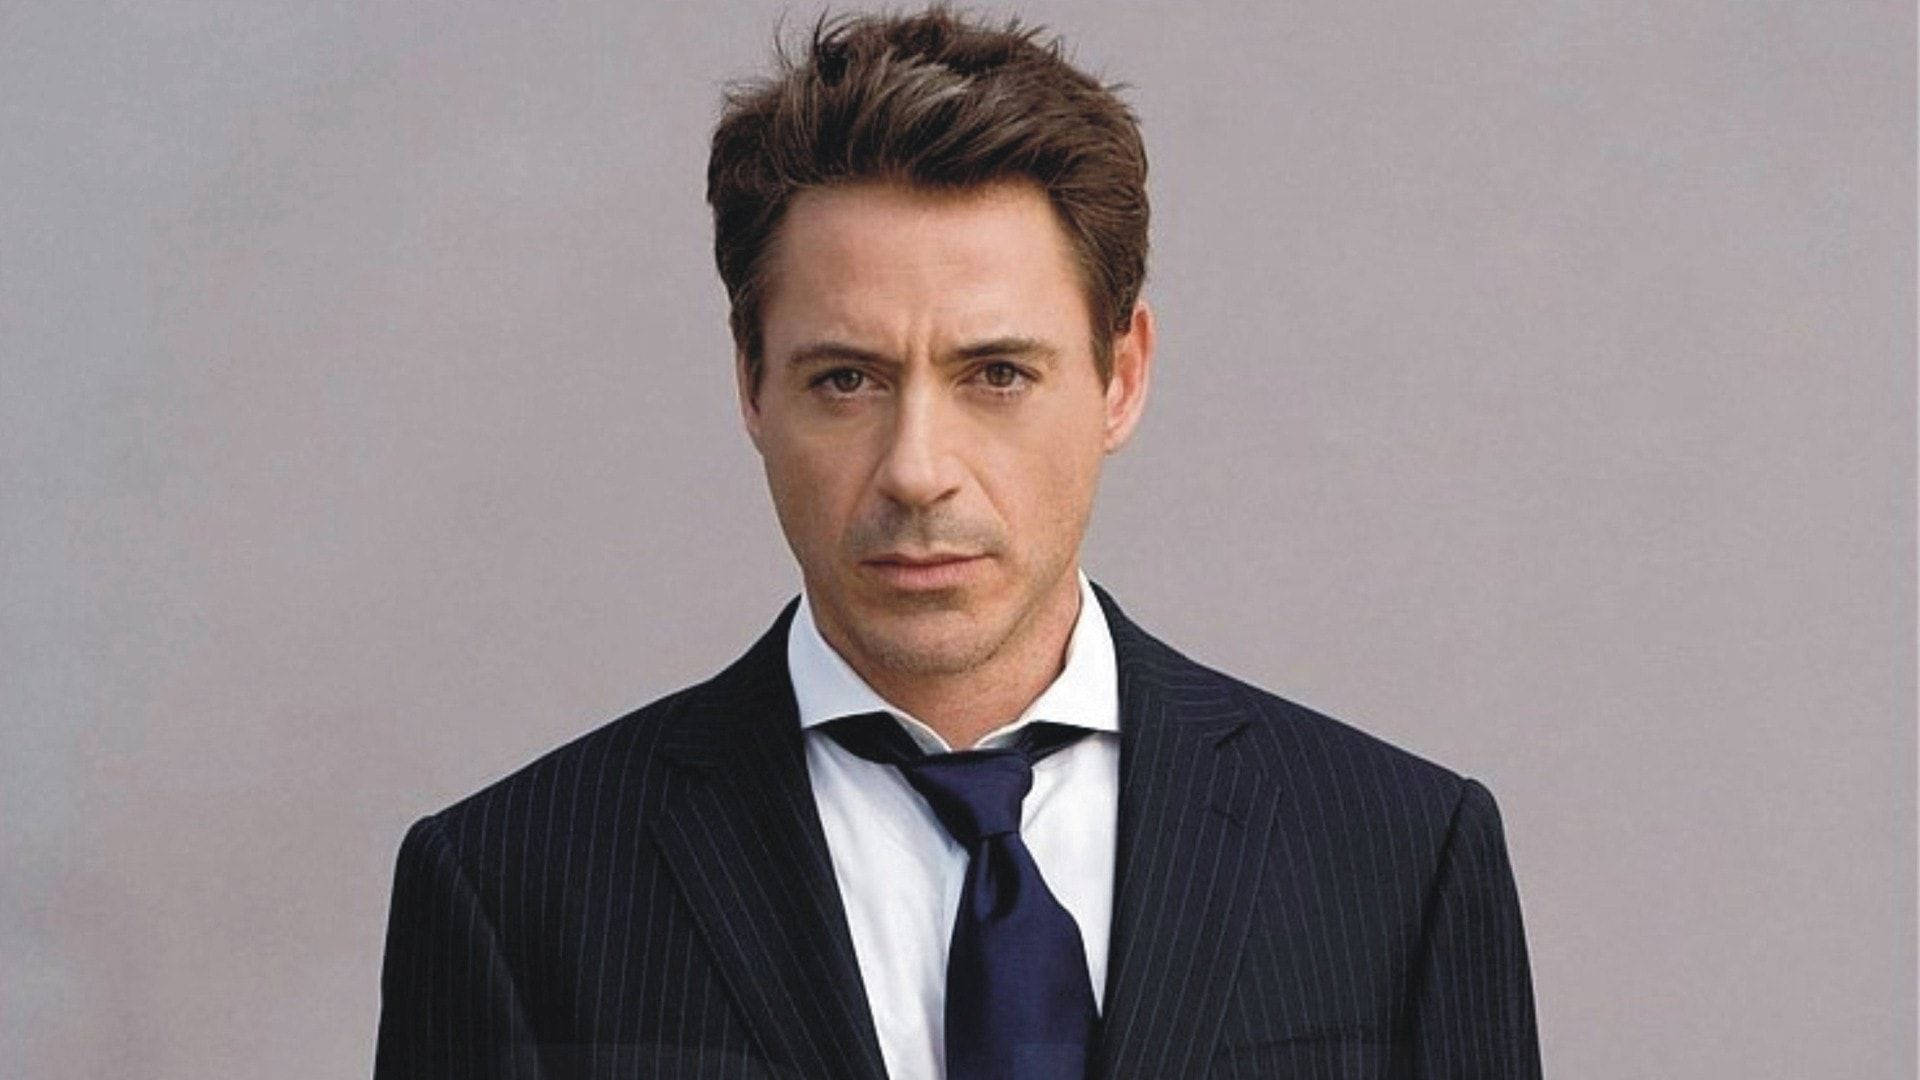 Blue Tie Robert Downey Jr. Background